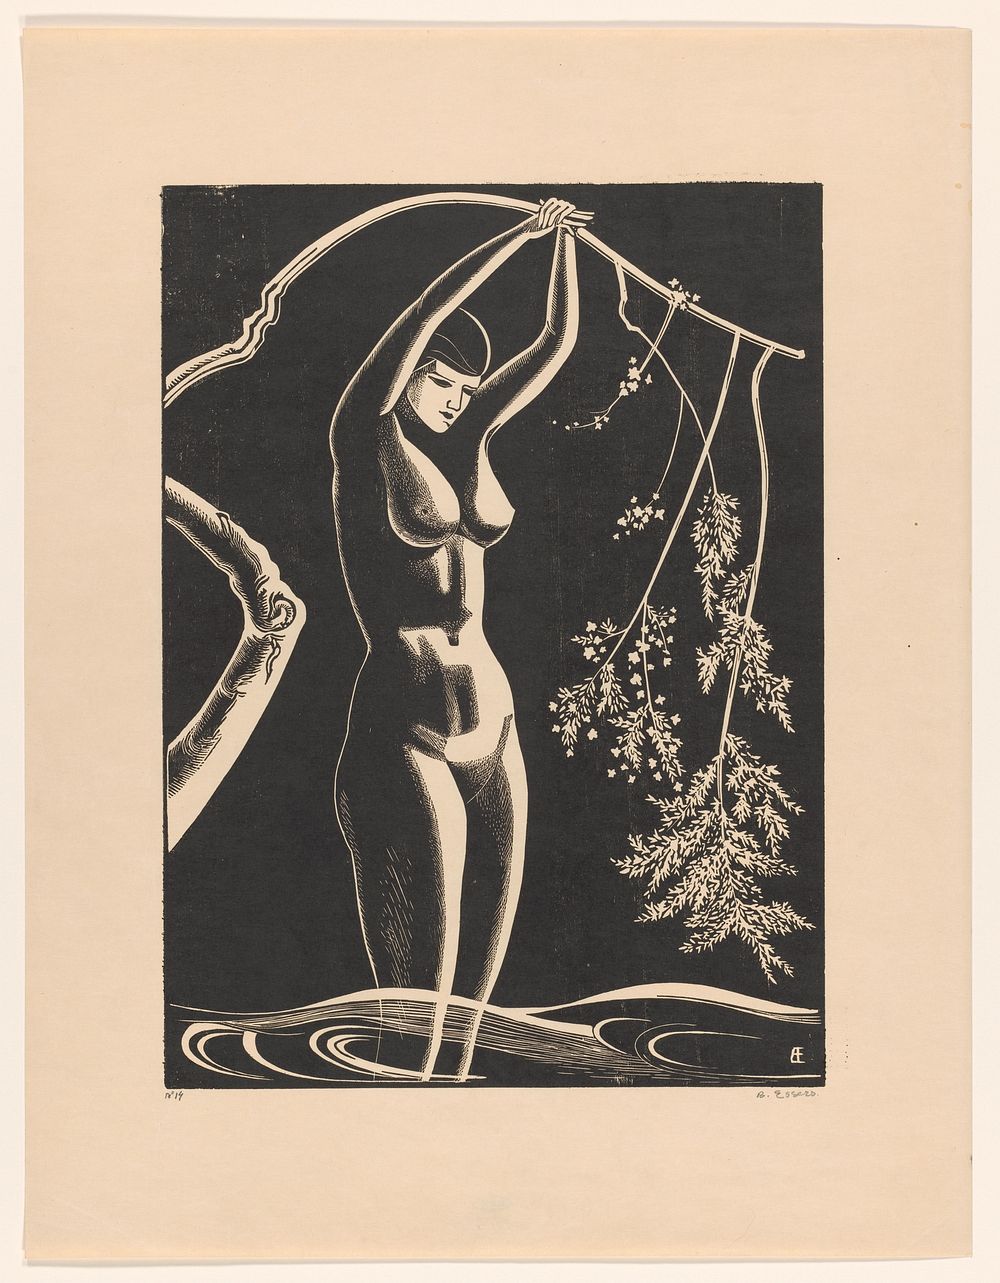 Naakte vrouw met tak (c. 1930) by Bernard Essers